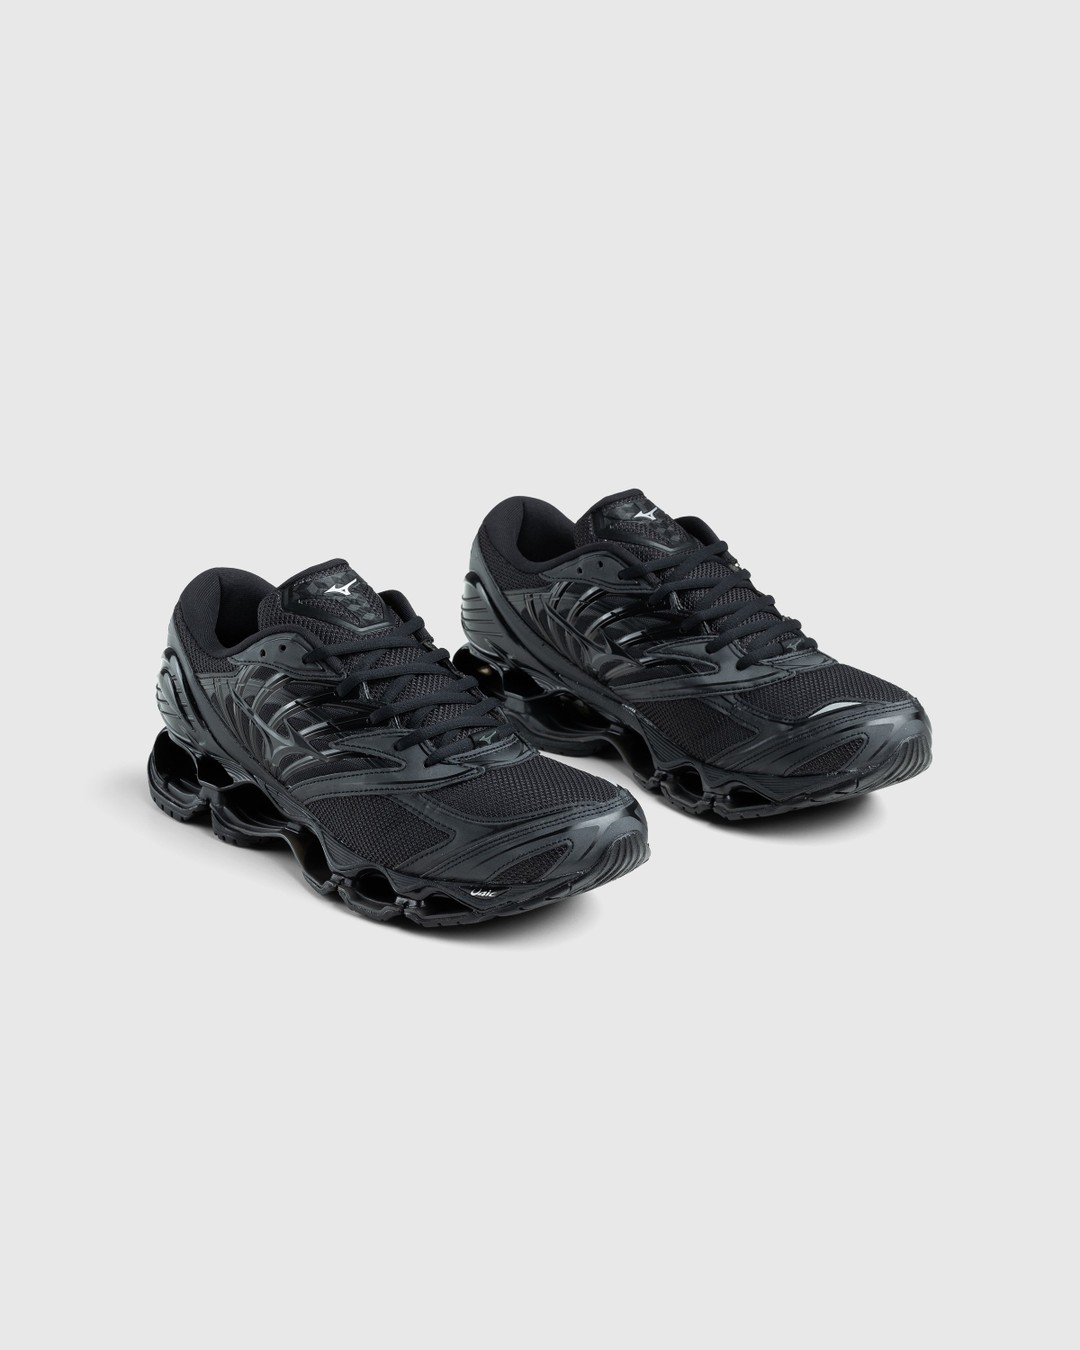 Mizuno – Wave Prophecy LS Black - Low Top Sneakers - Black - Image 3